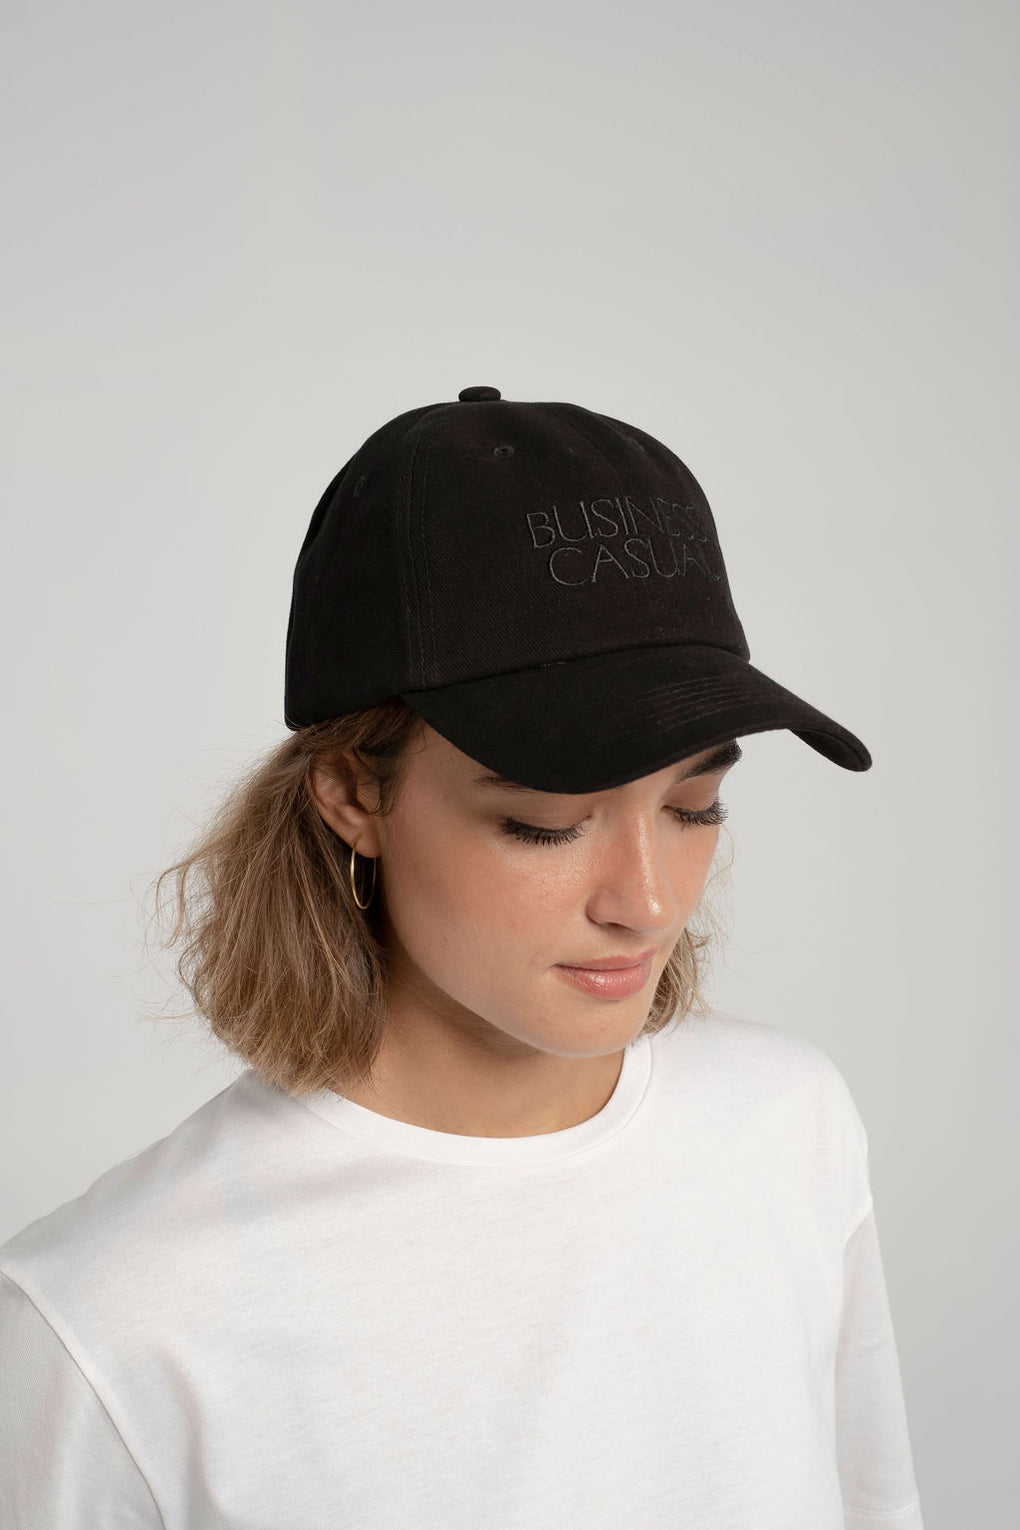 Business Casual-black hat-Business Casual hat-Idun-St. Paul